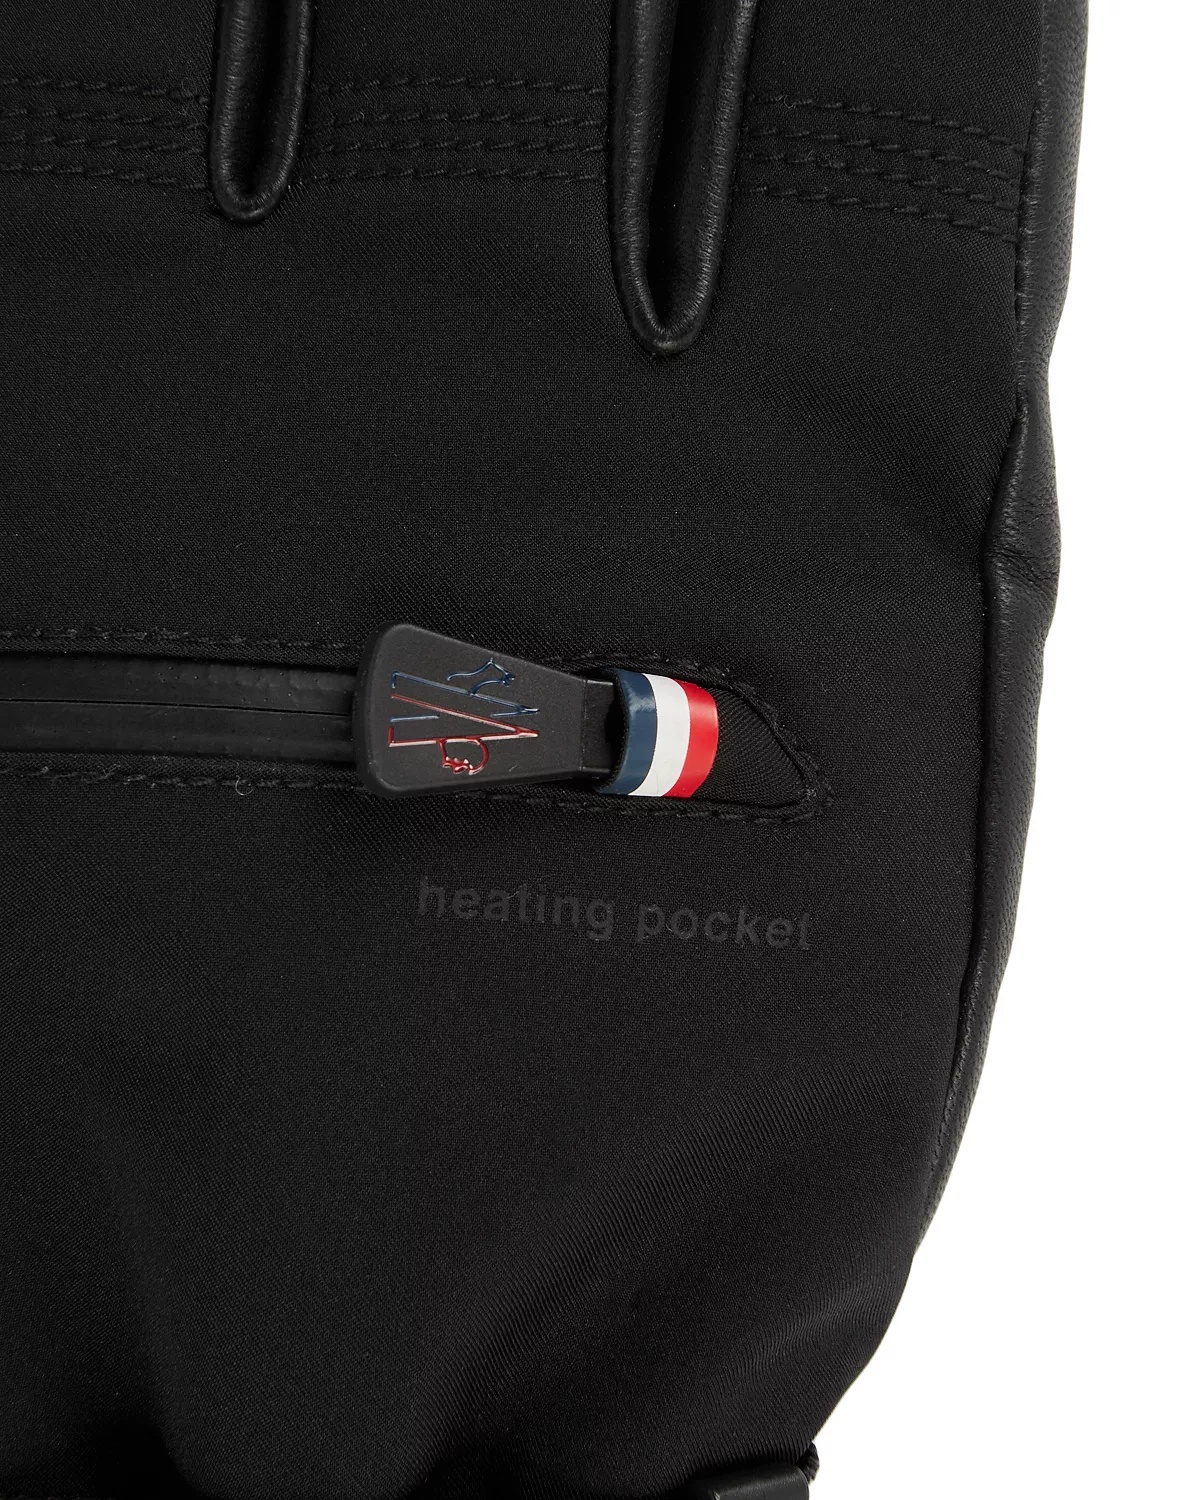 Heat Pocket Gloves - 2